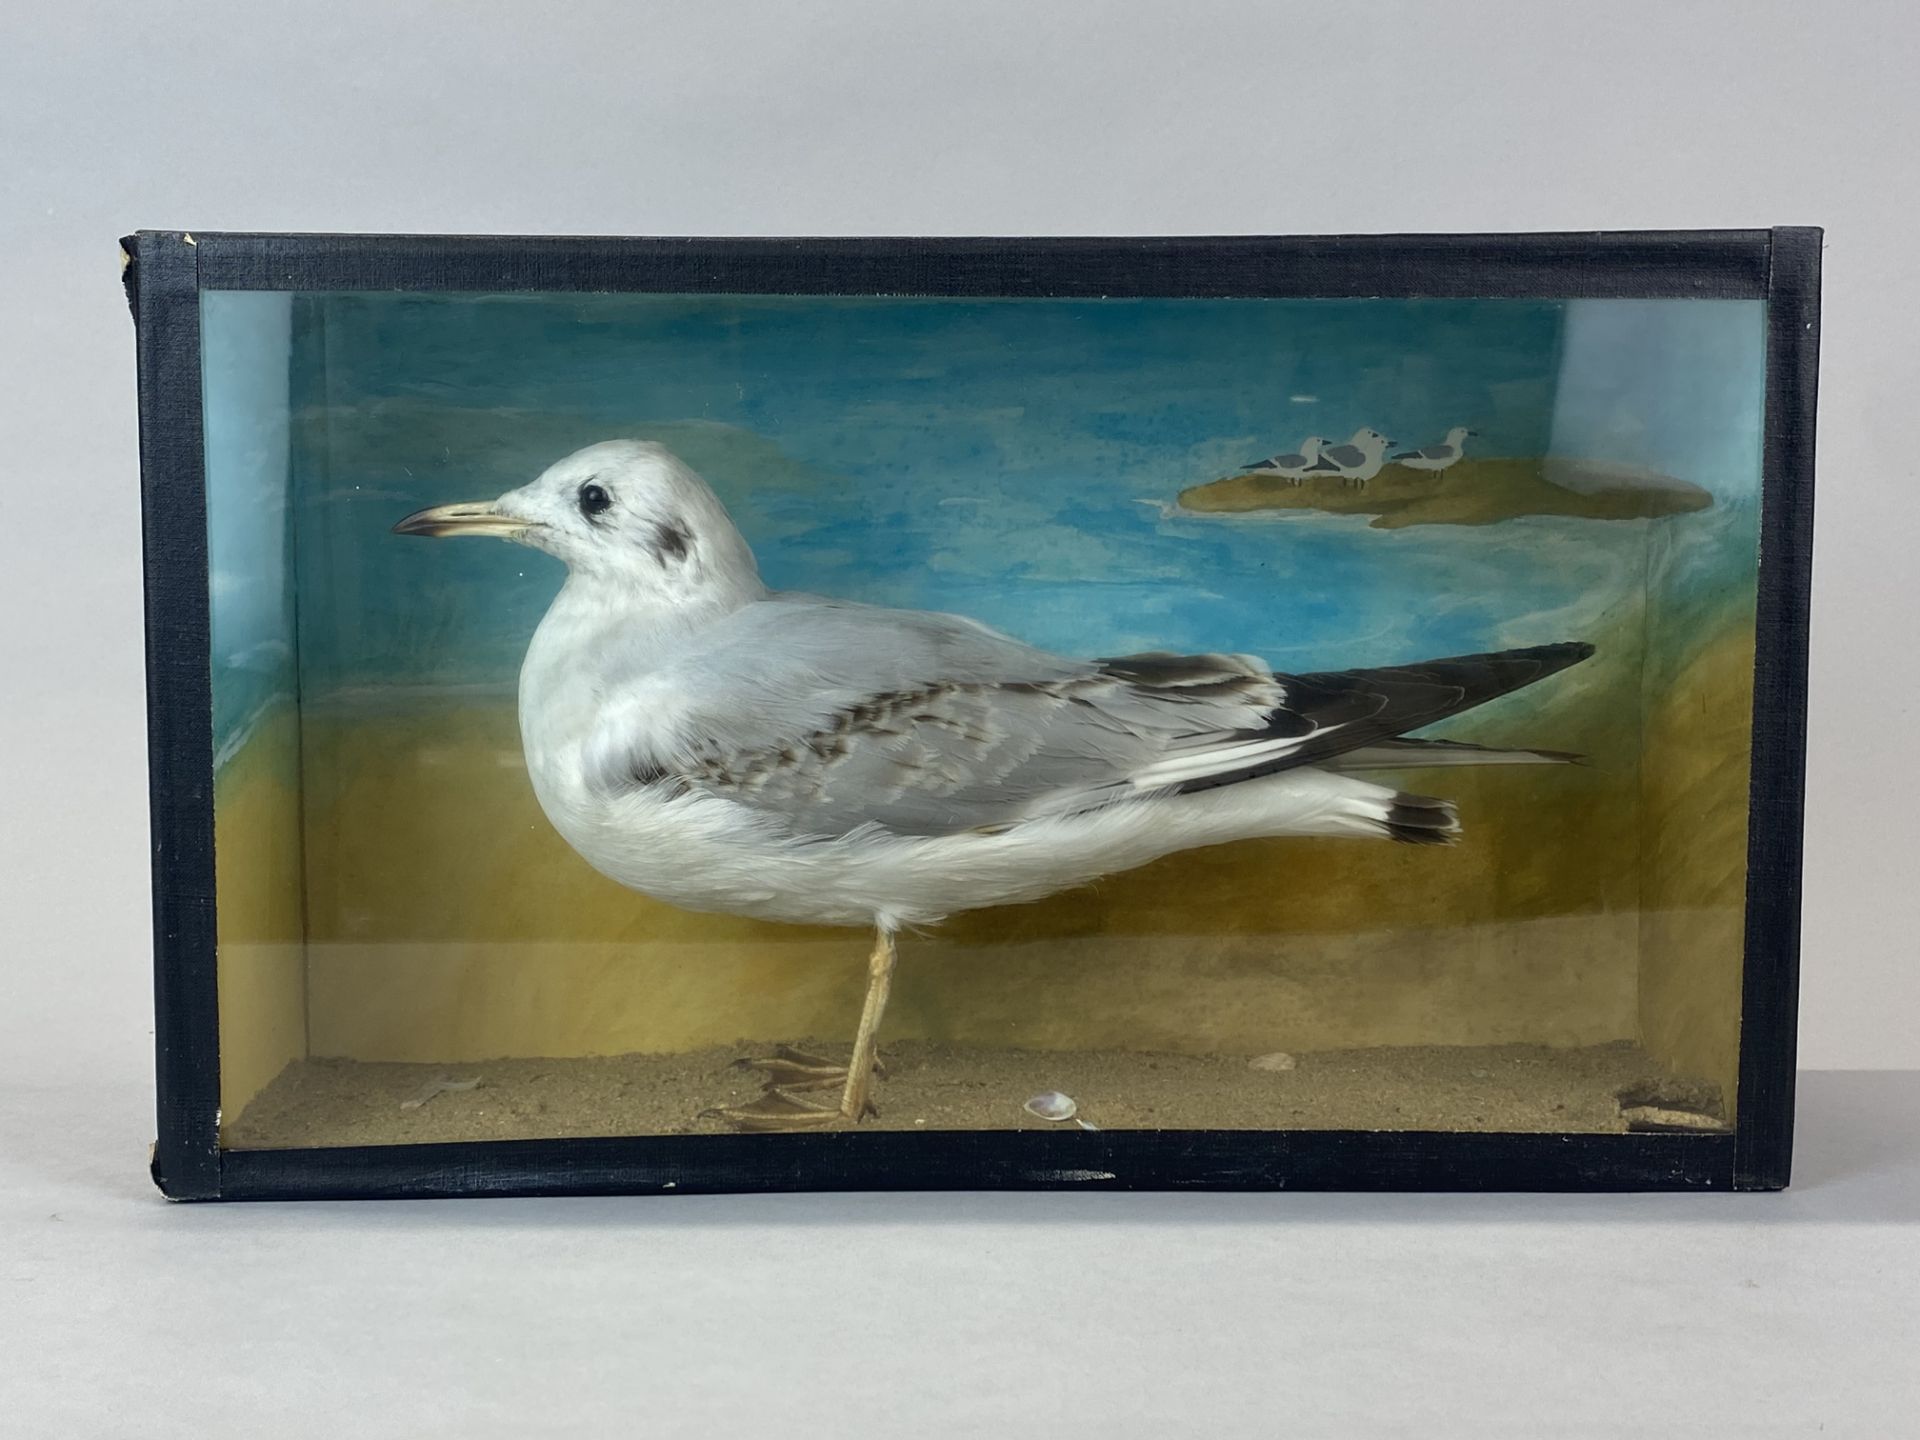 Taxidermy interest. A glass cased seagull, case 40 x 23 x 12.5cm.